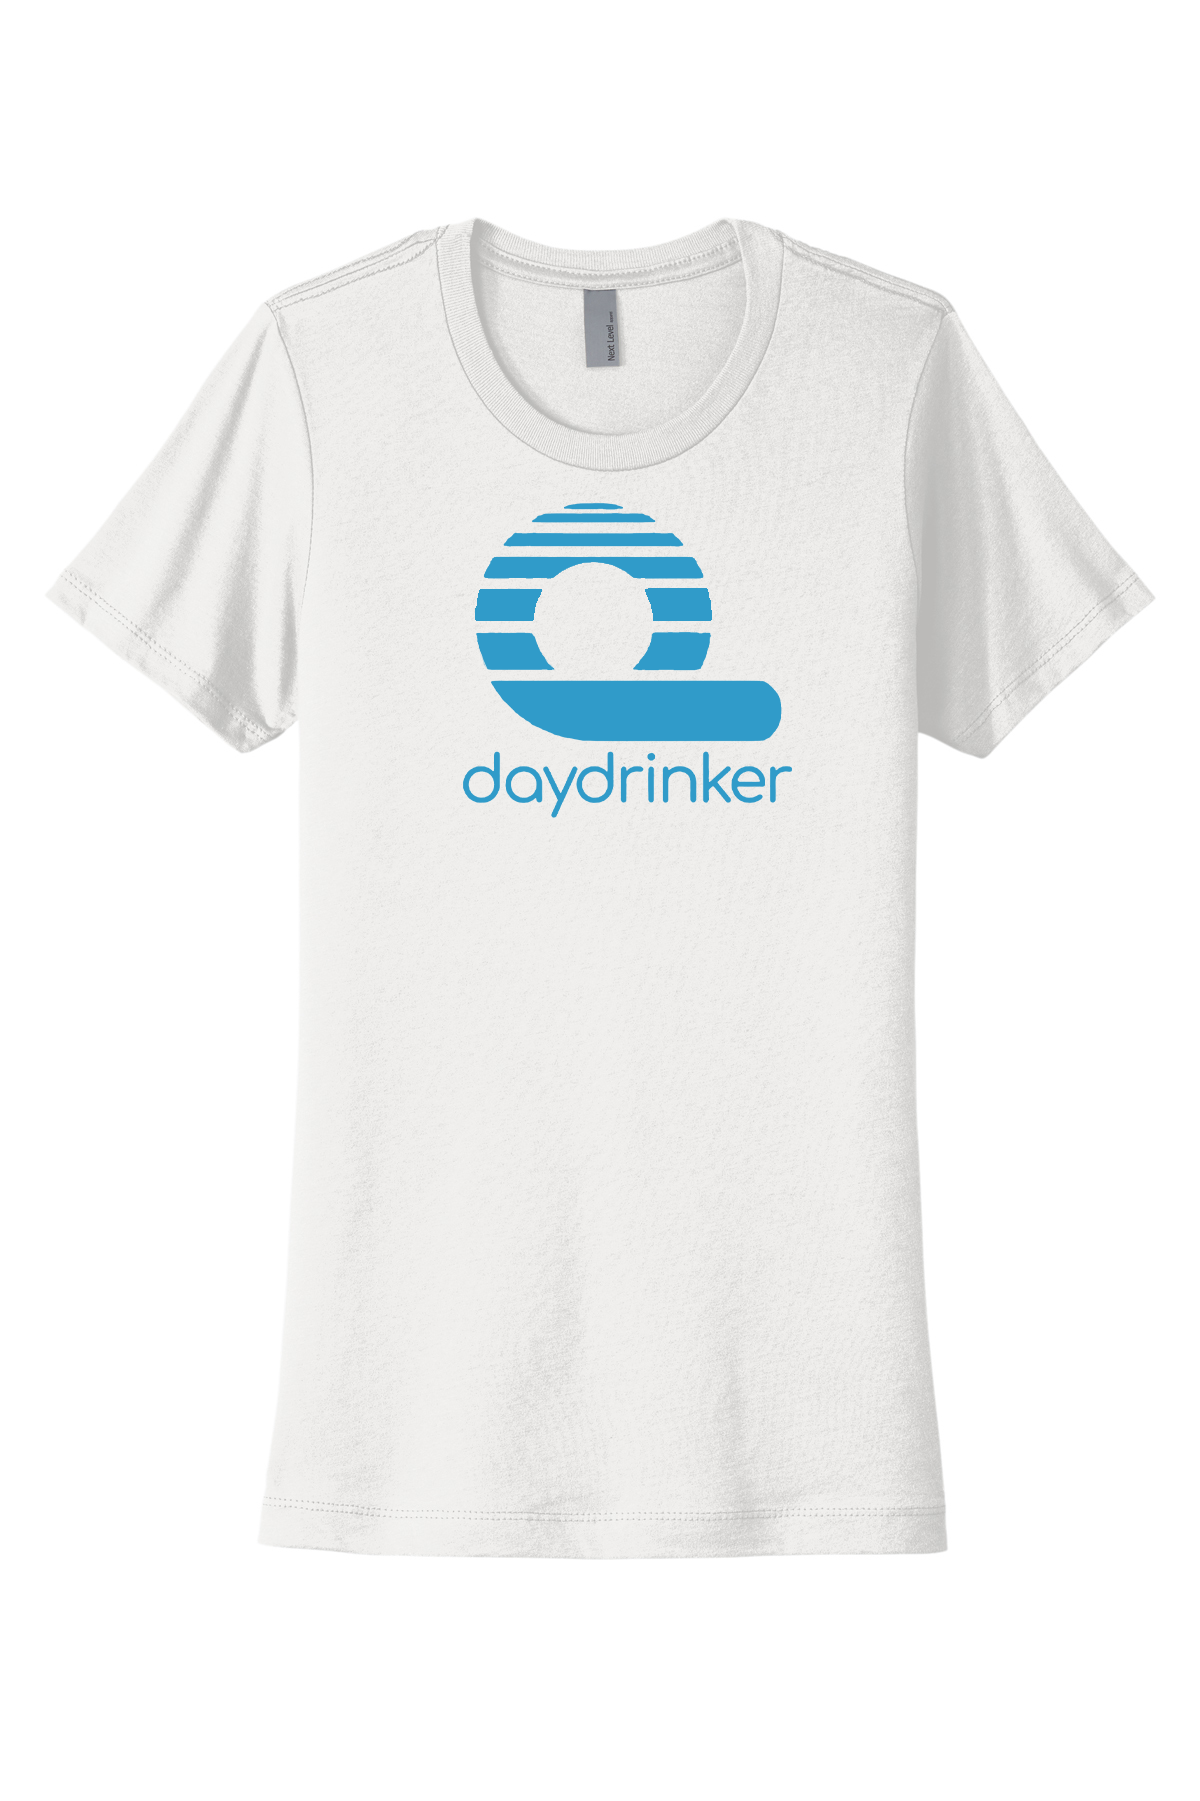 Daydrinker Cotton Crew Tee - Solid Logo